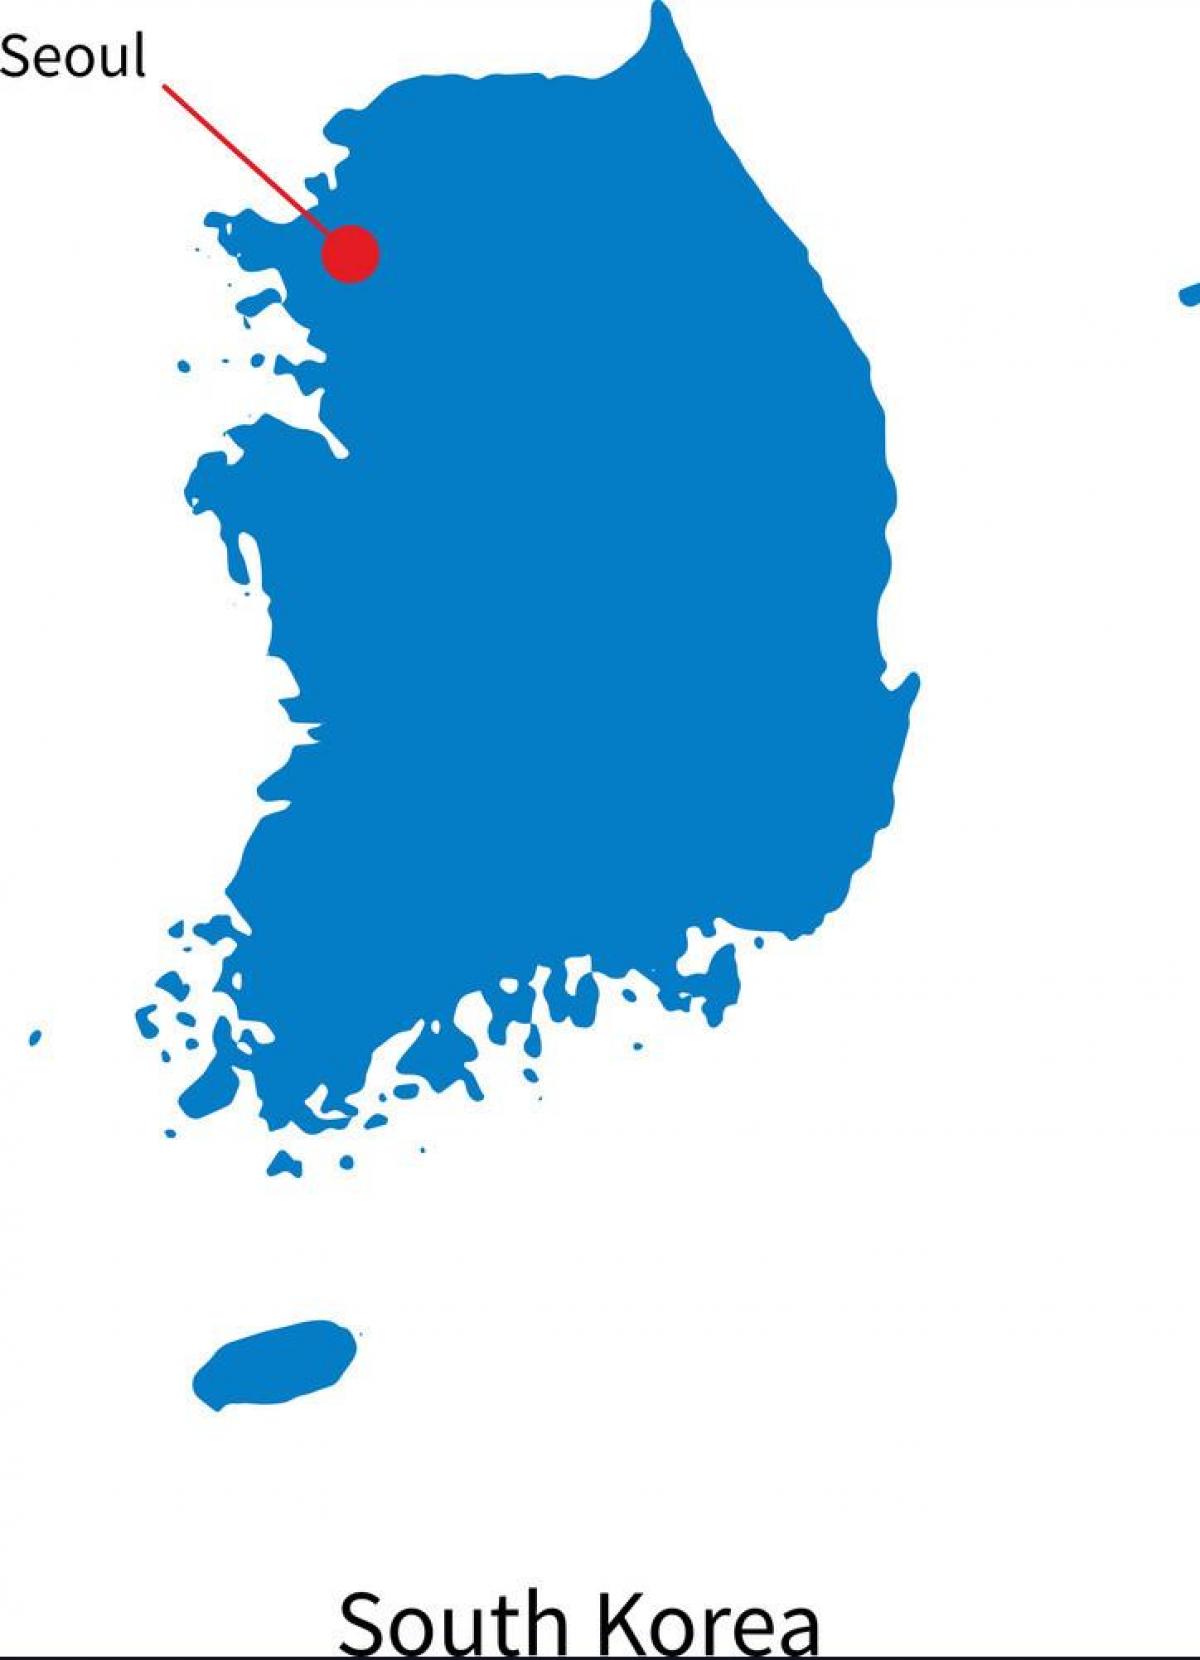 South Korea (ROK) capital map